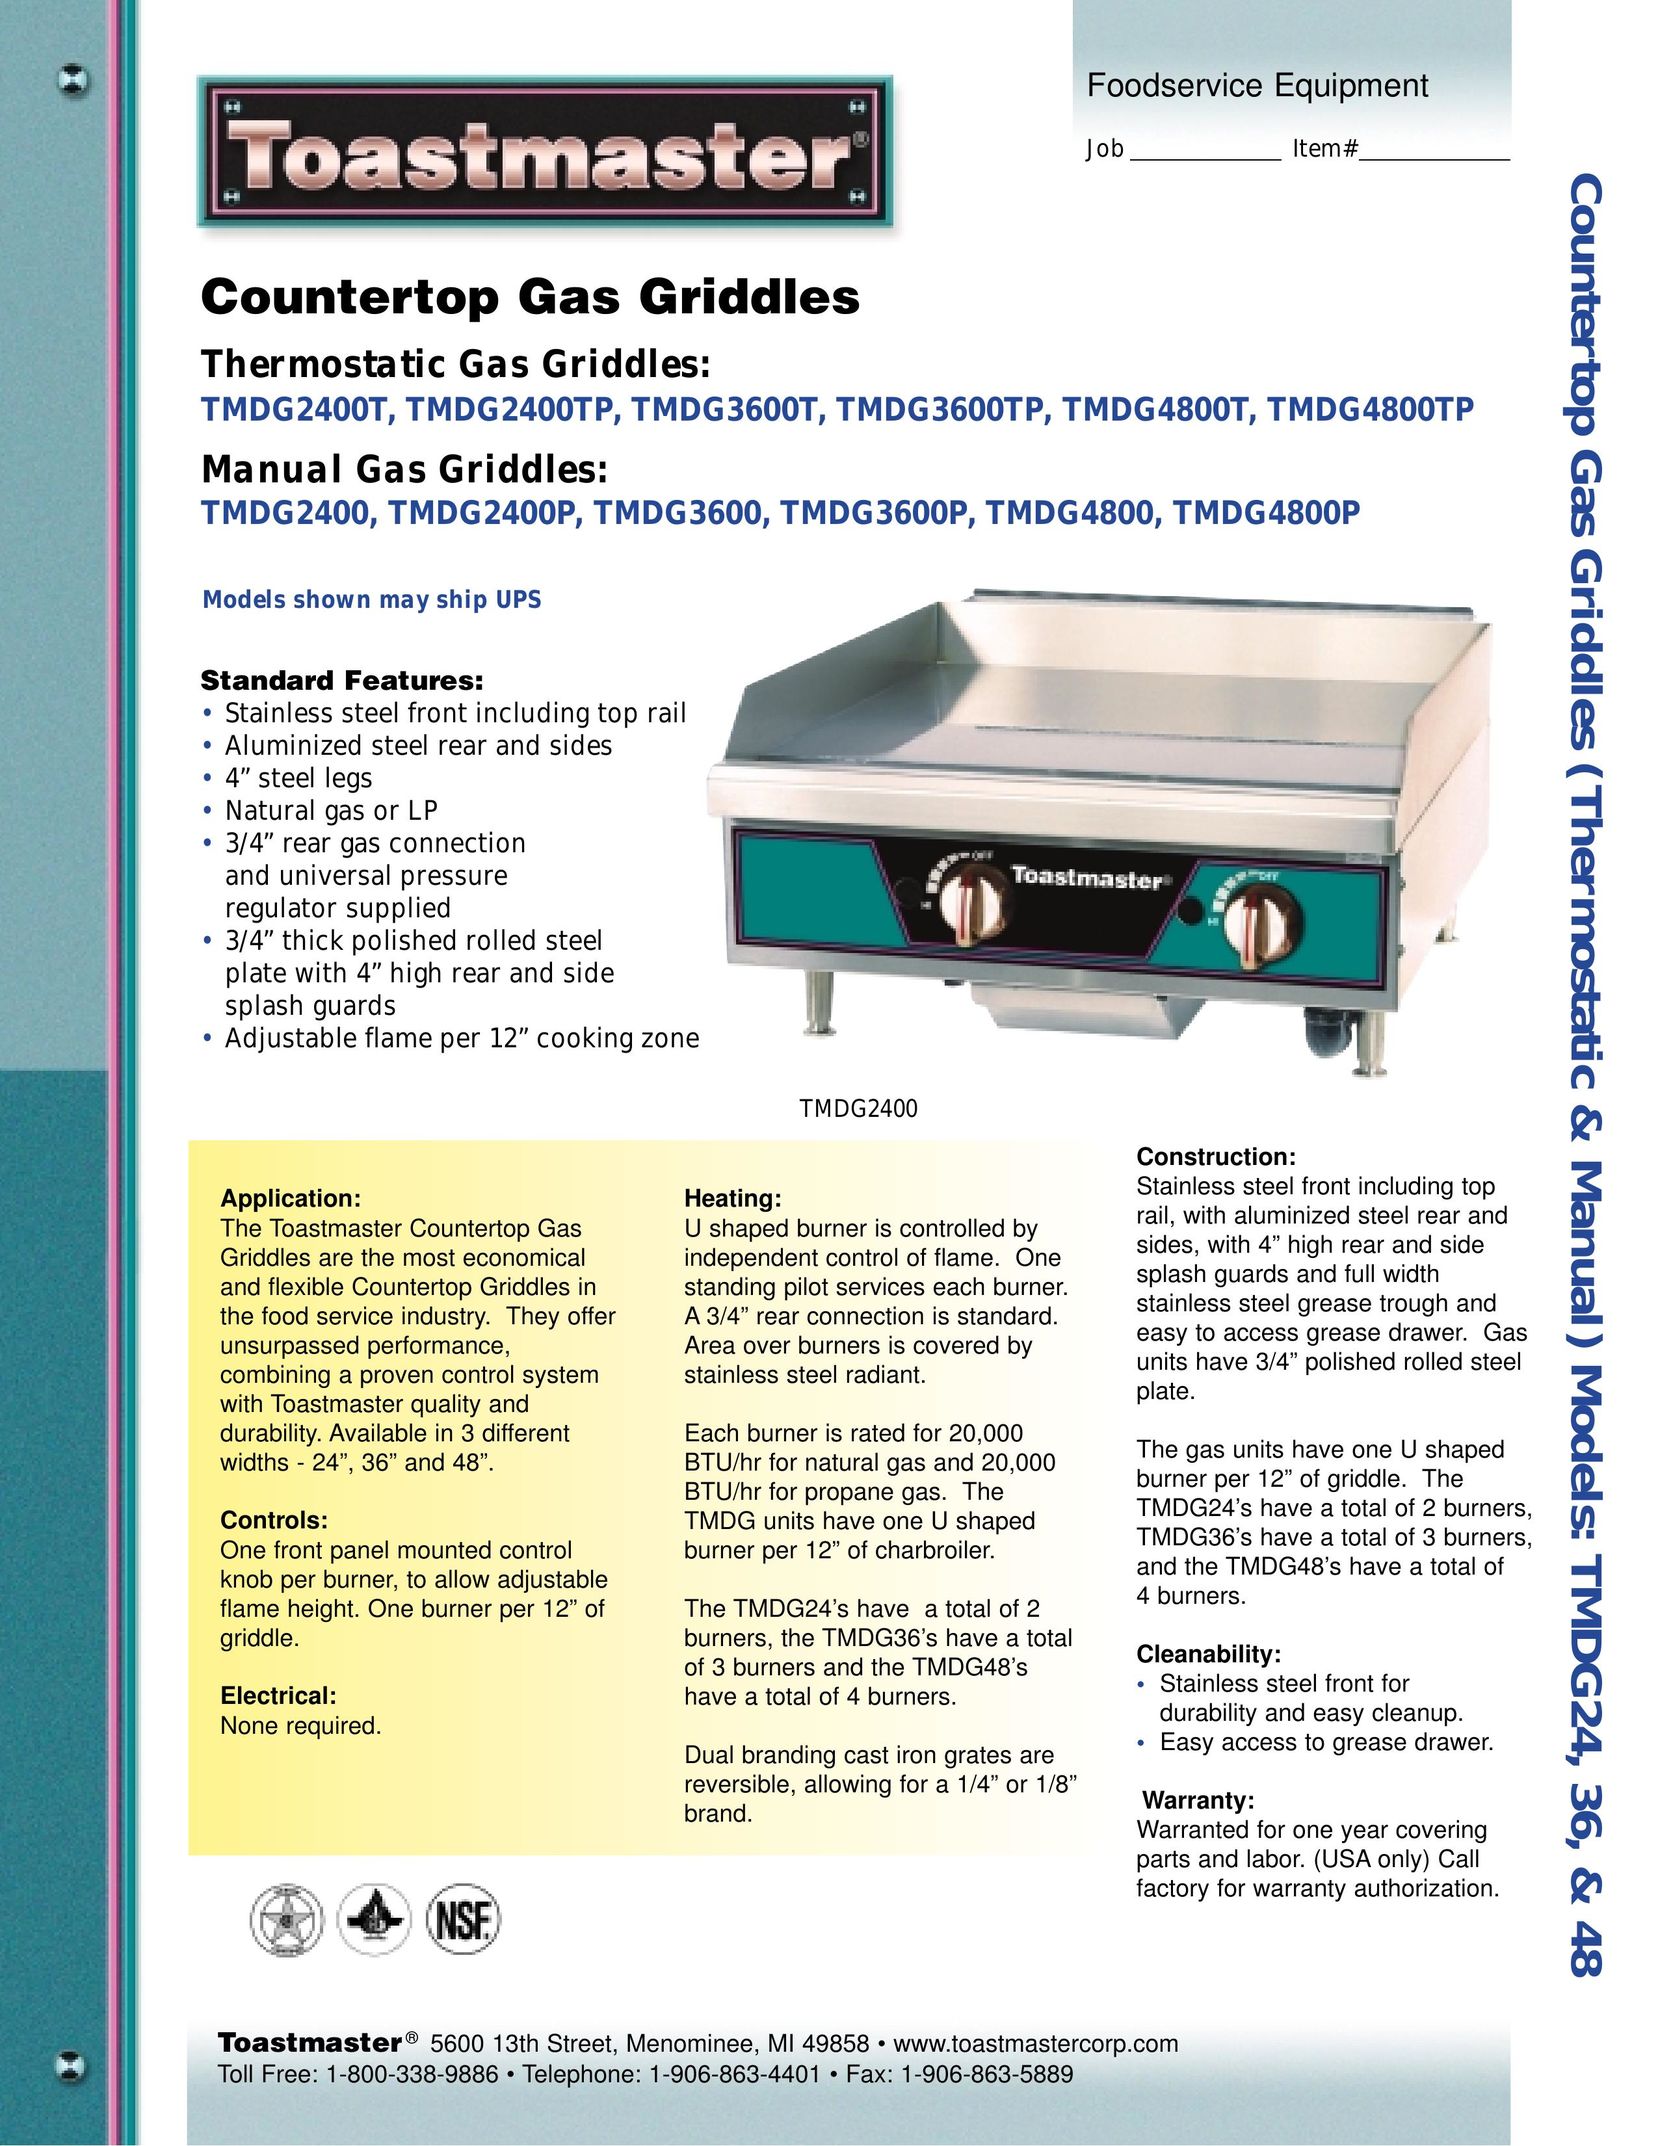 Toastmaster TMDG4800TP Griddle User Manual